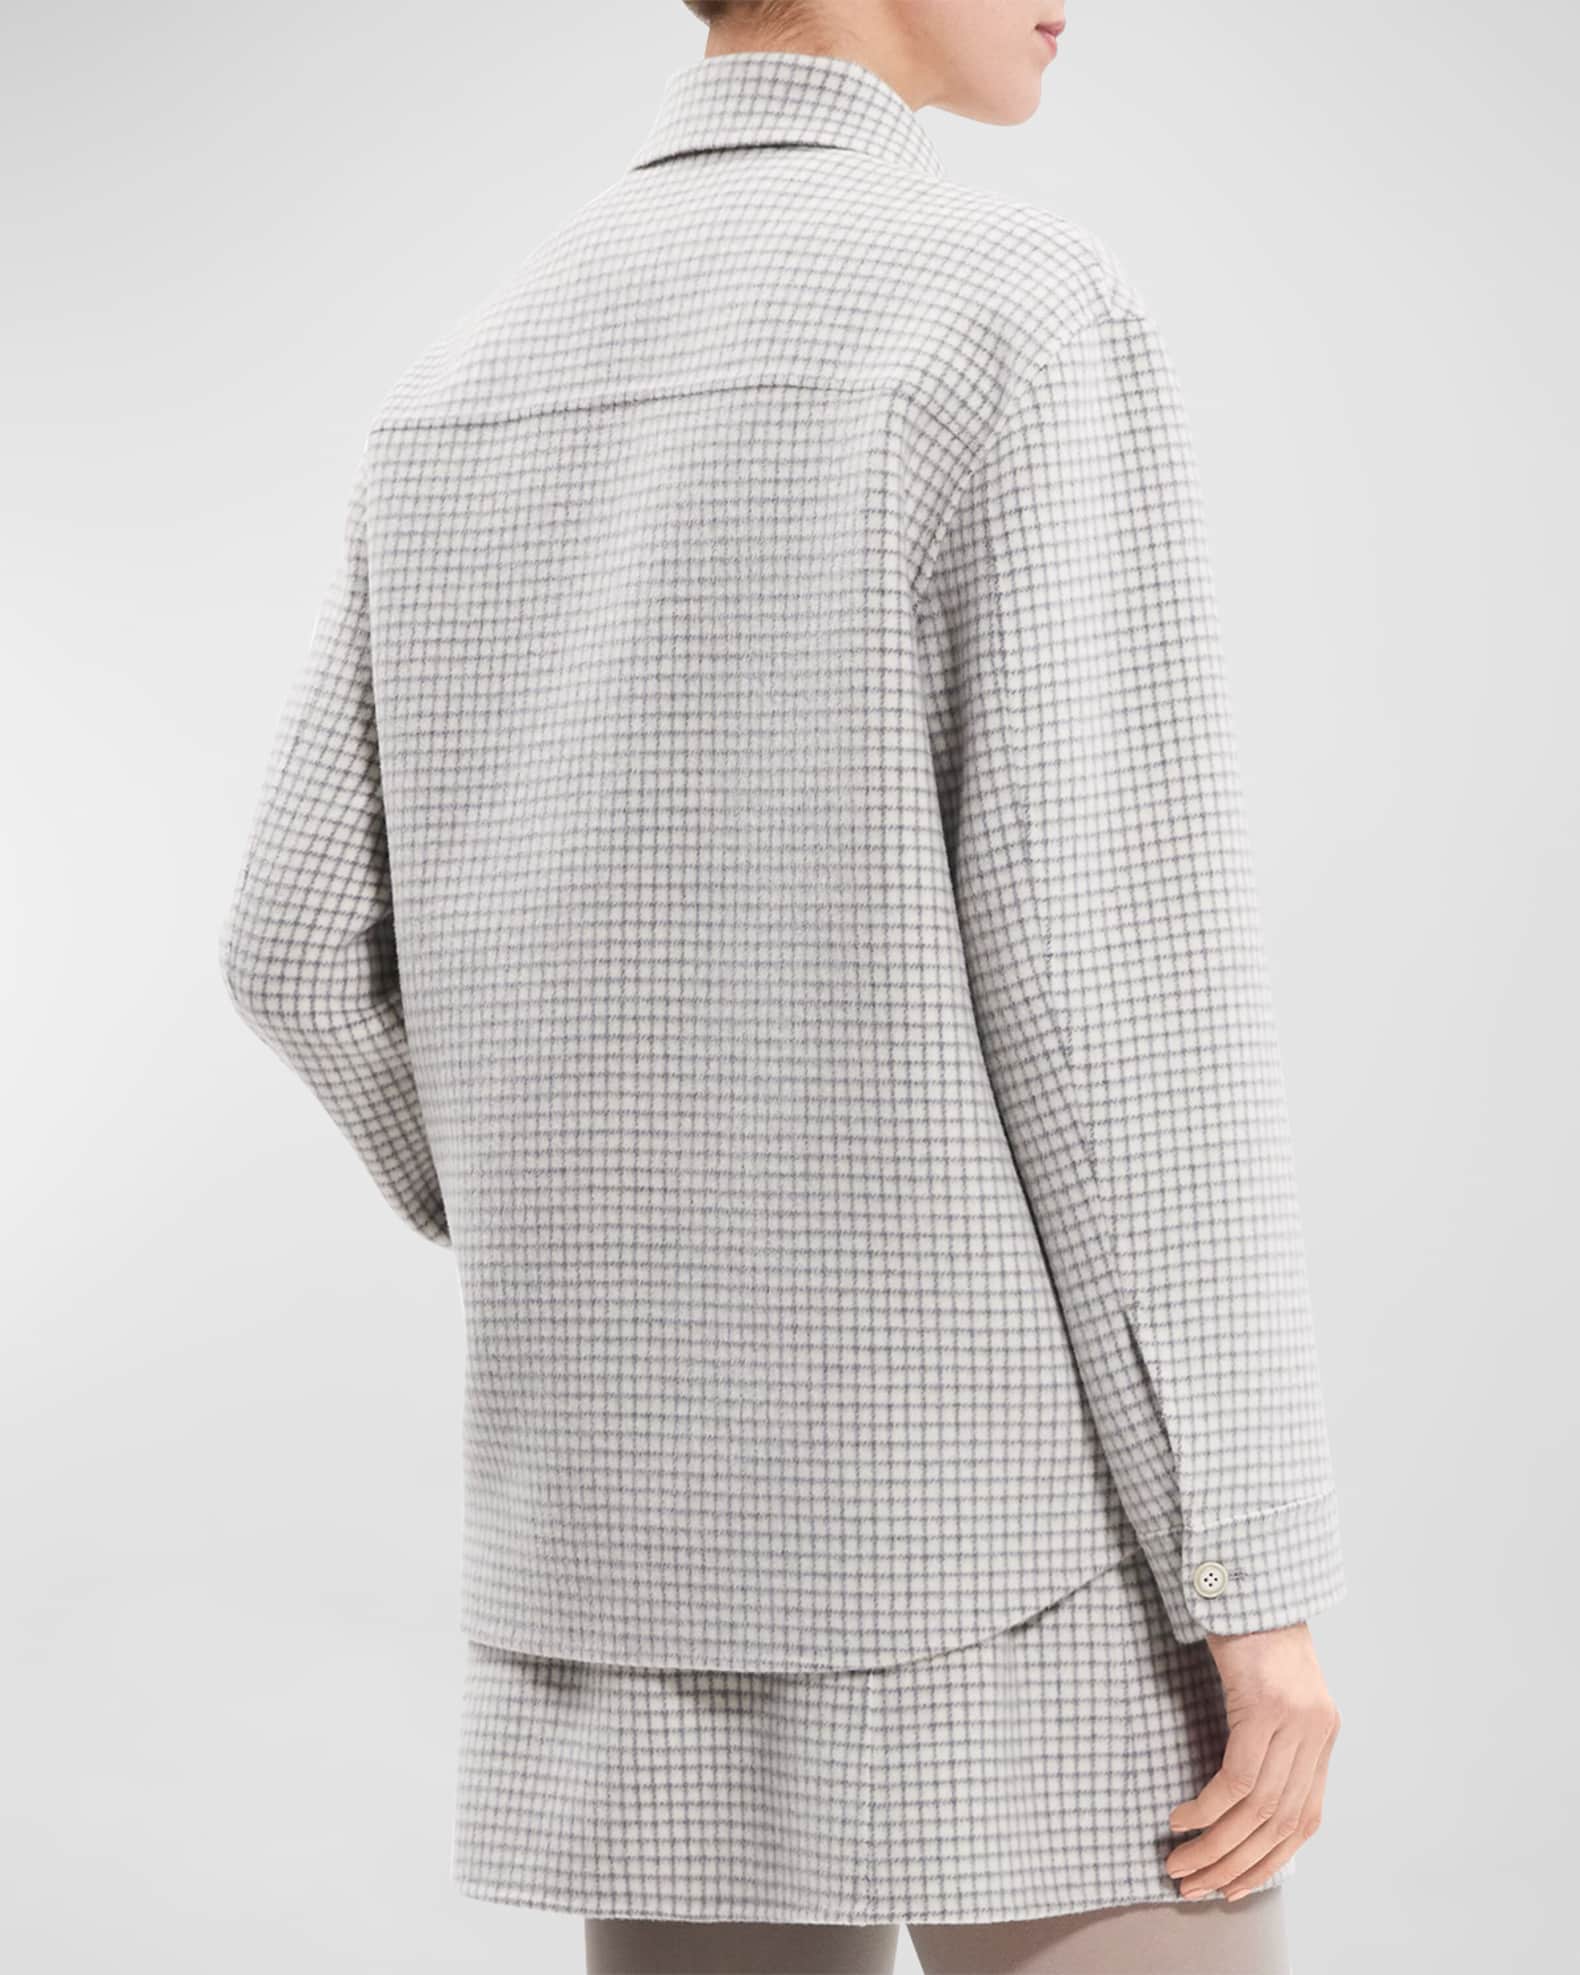 Theory Checked Shirt Jacket | Neiman Marcus